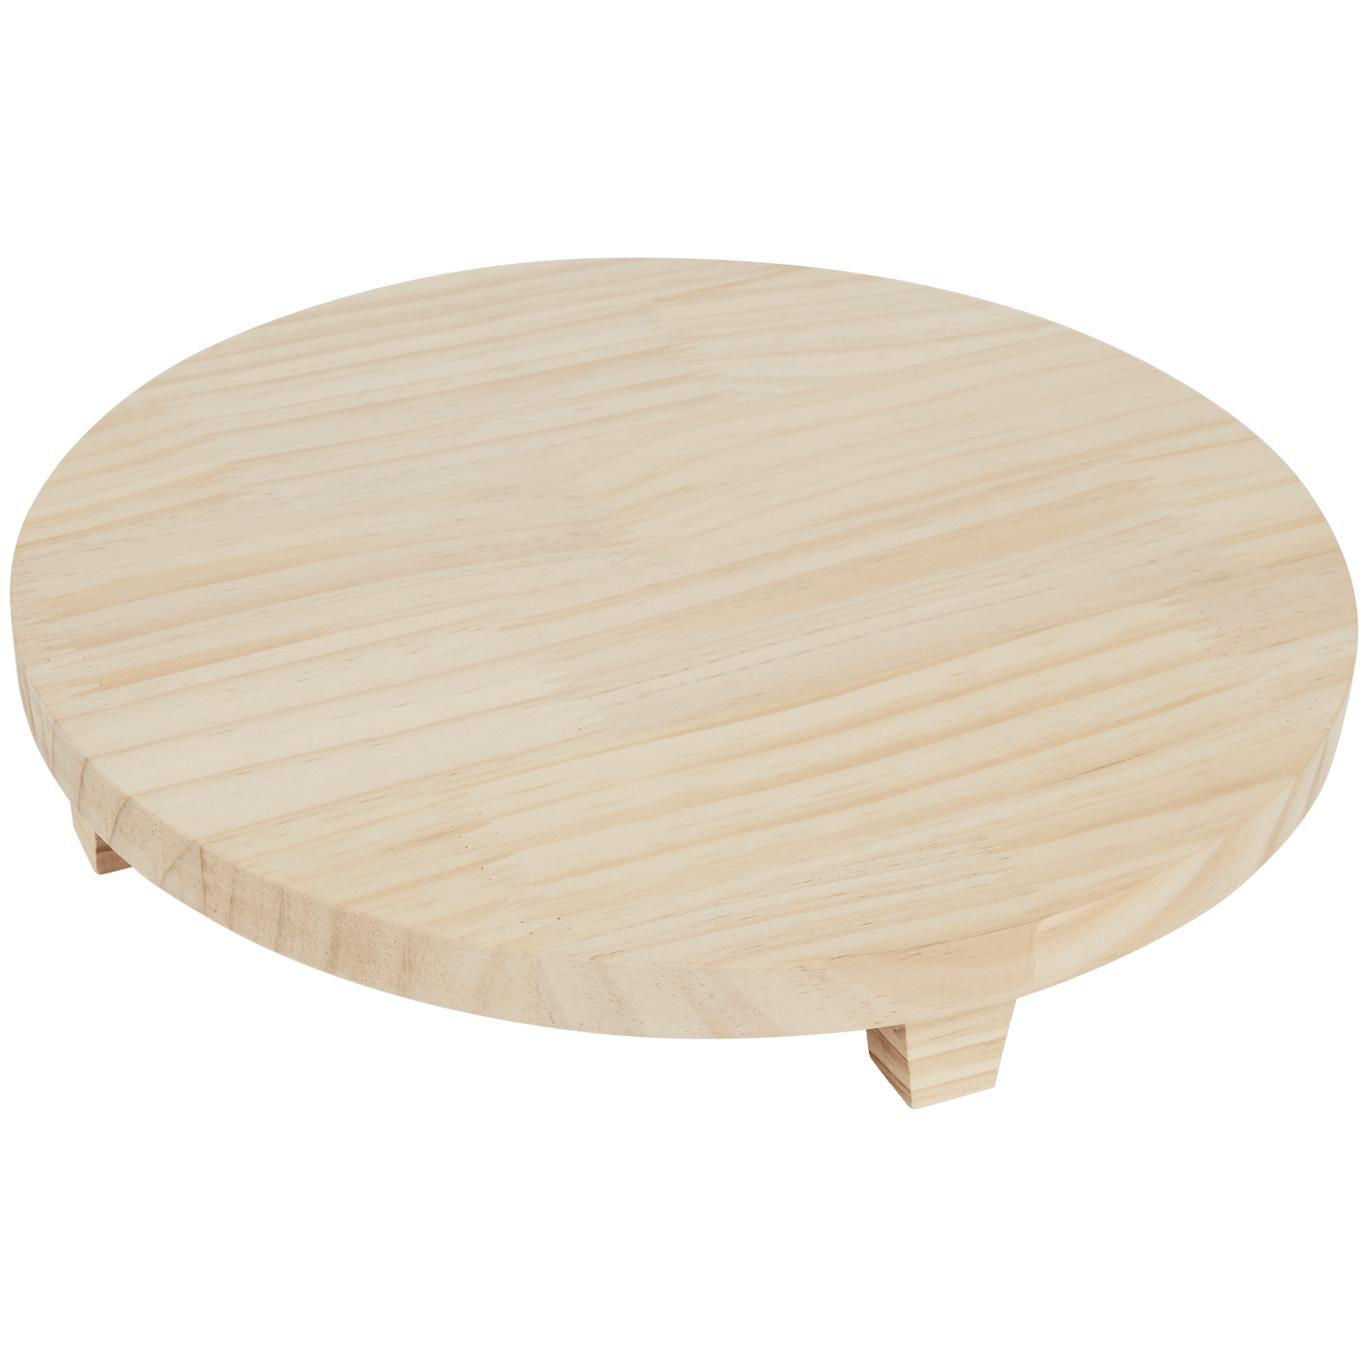 Plato de madera